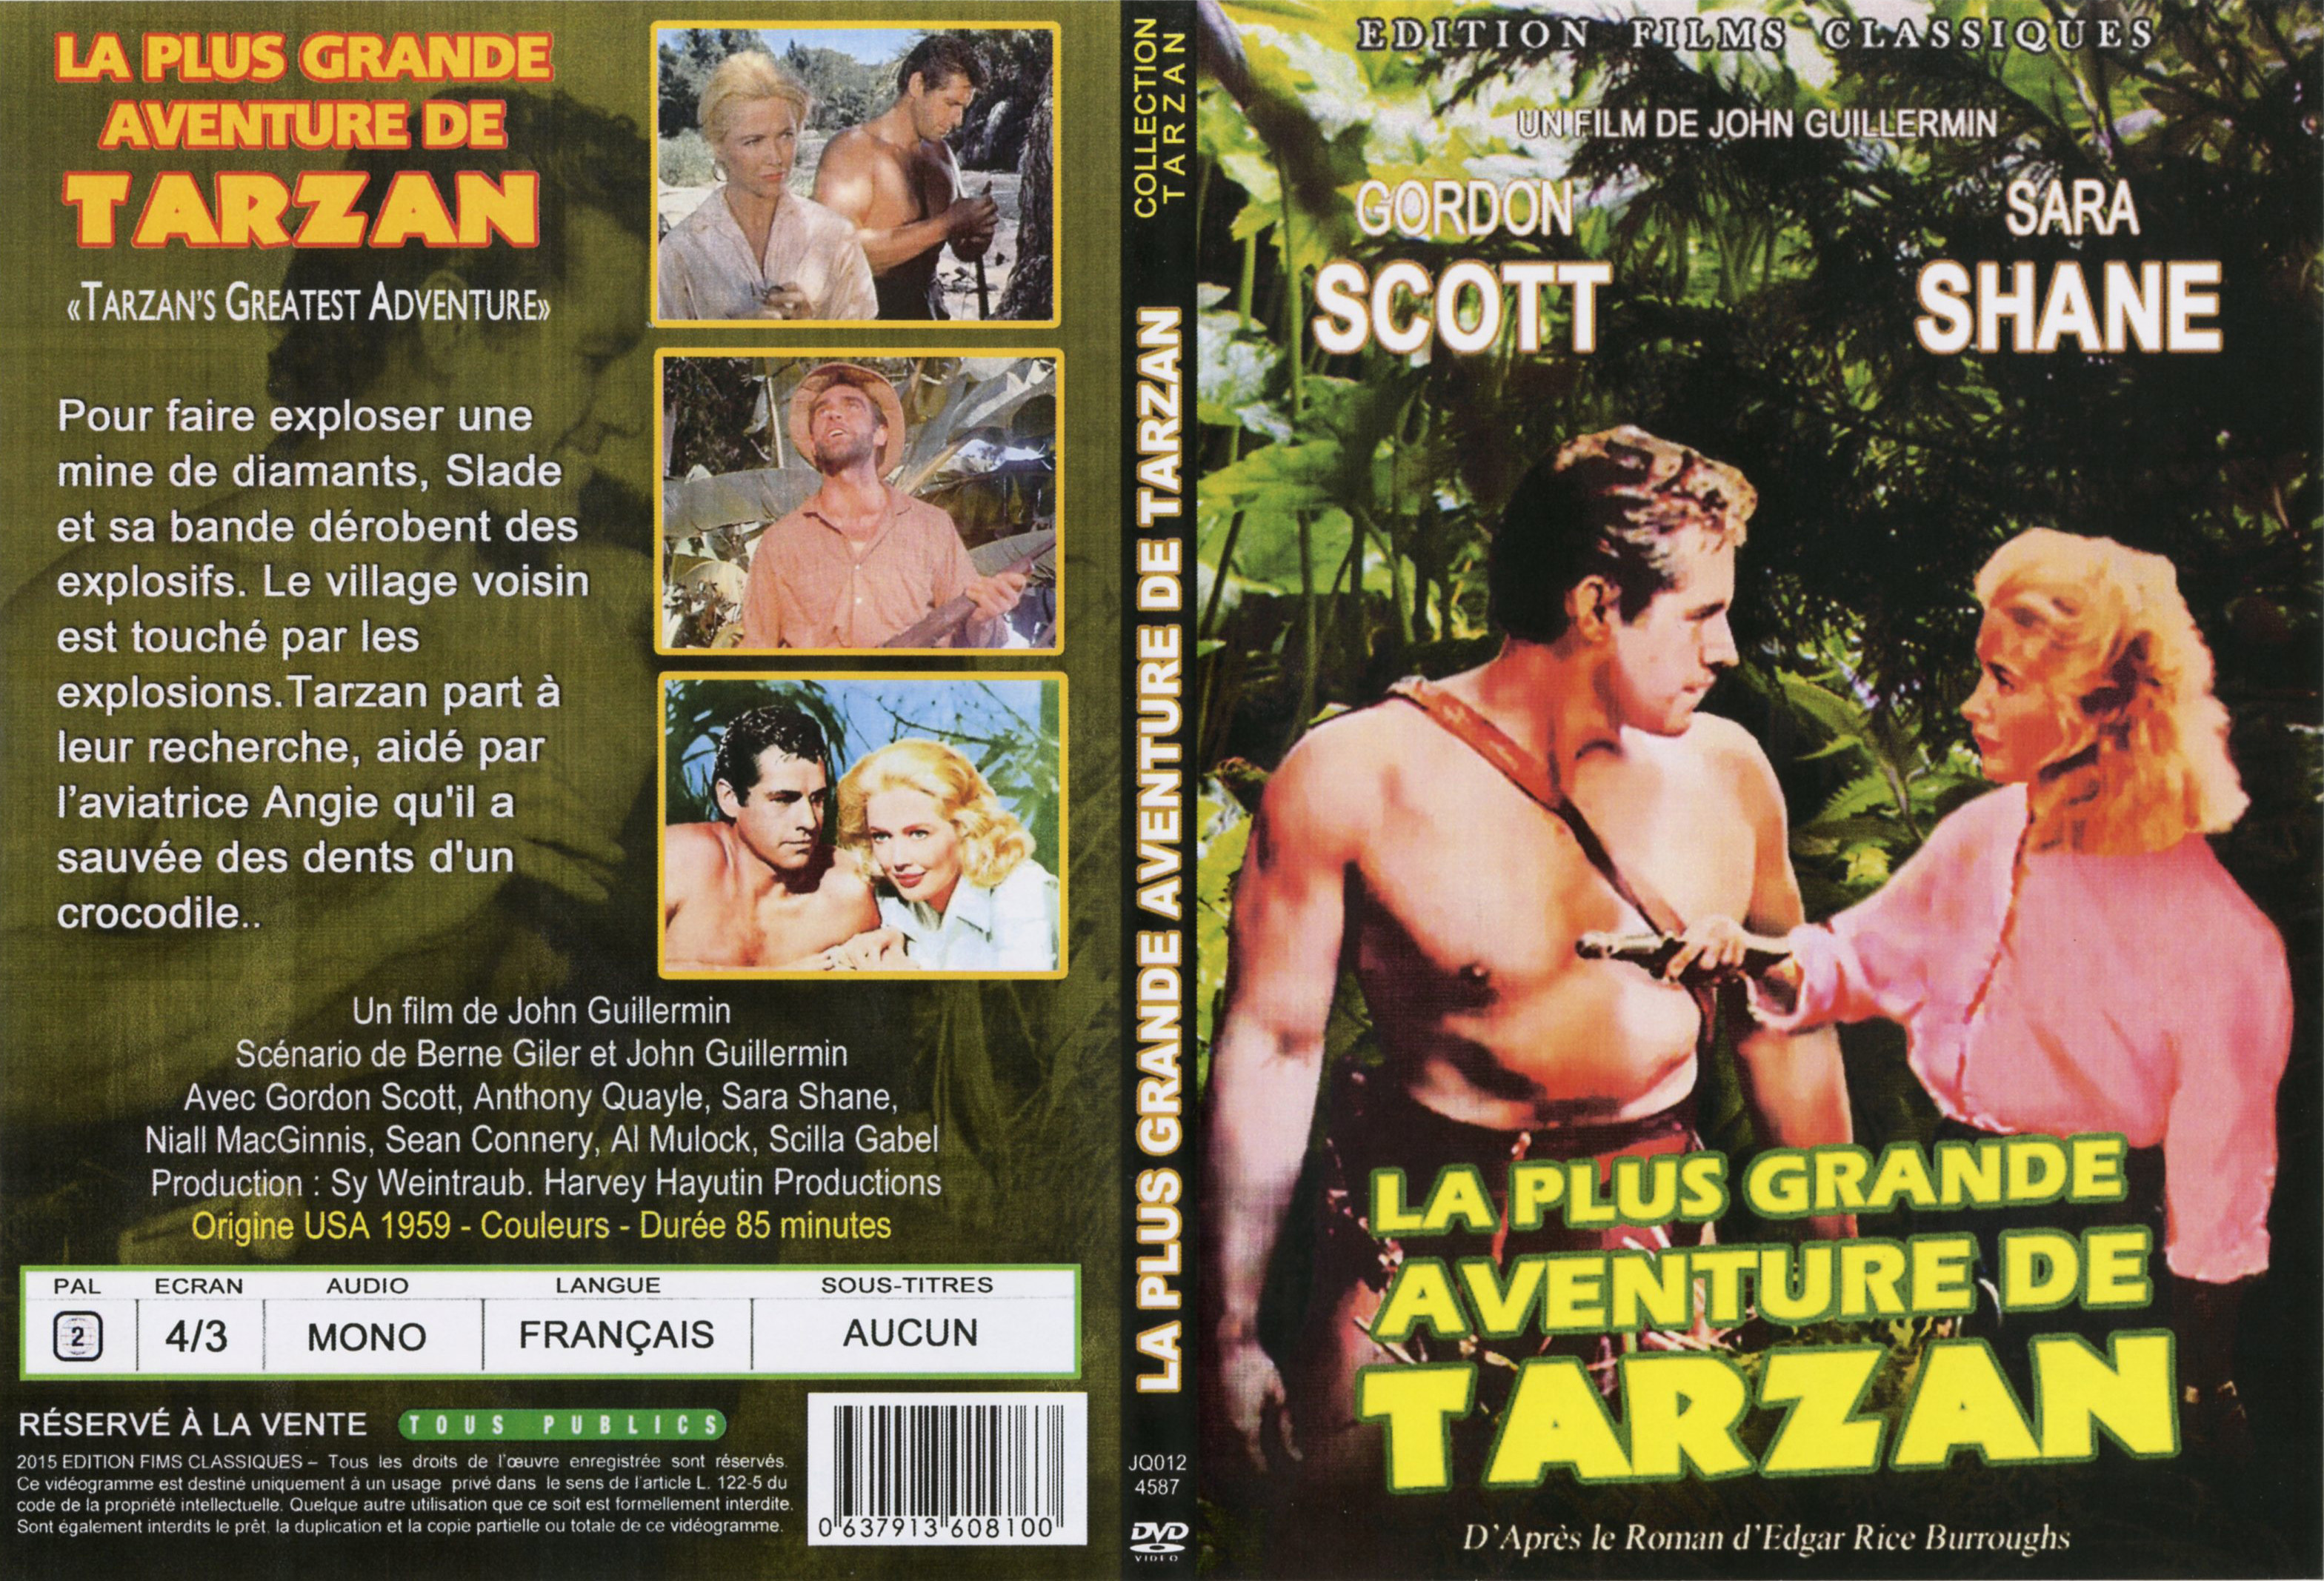 Jaquette DVD La plus grande aventure de Tarzan - SLIM